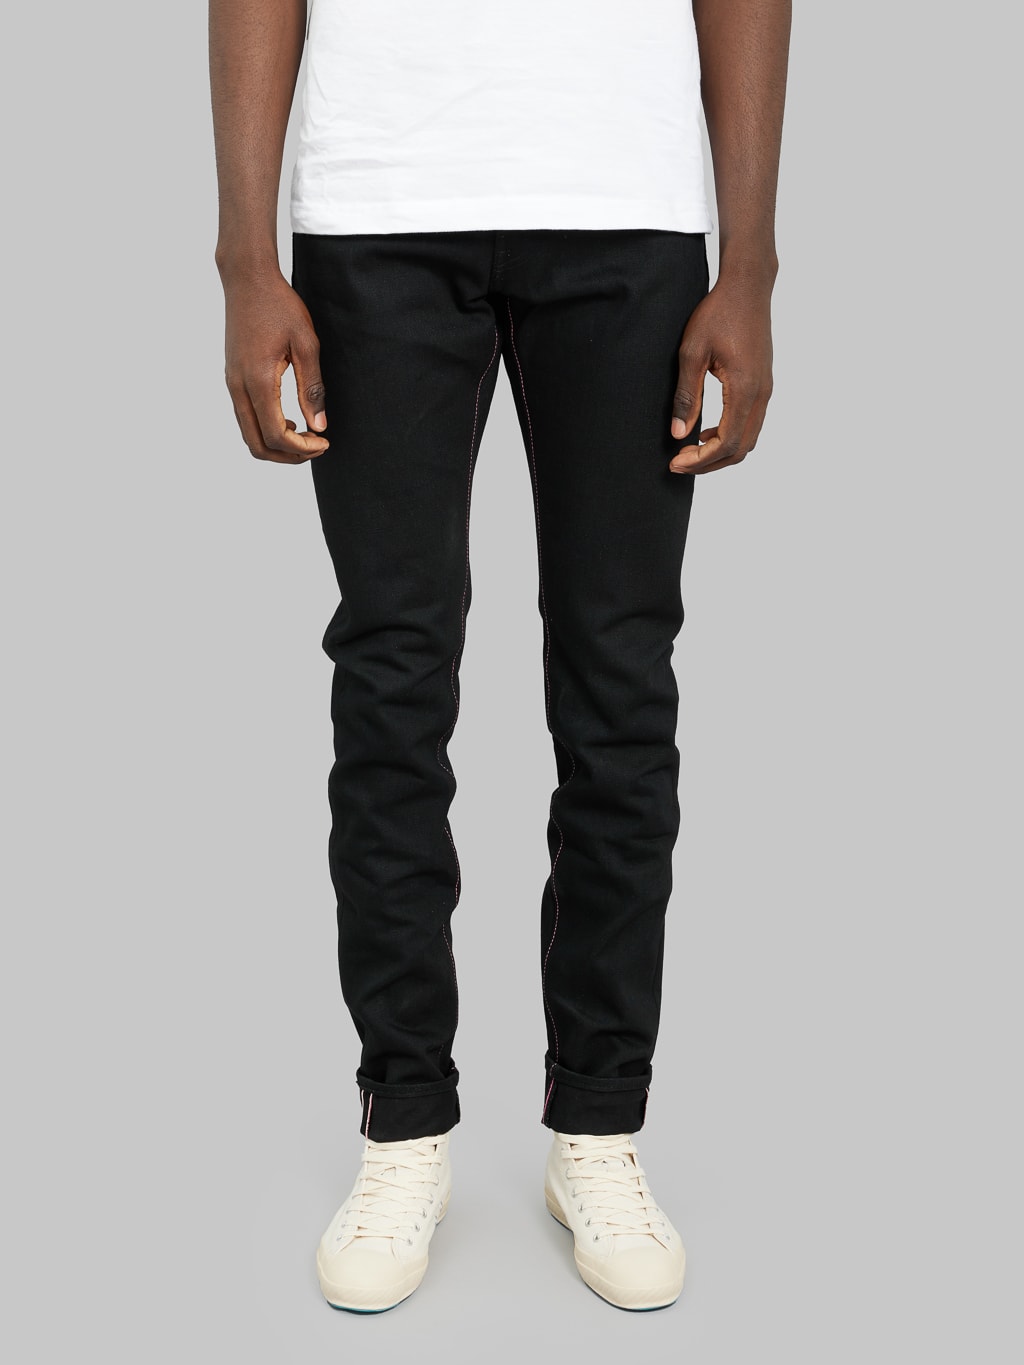 momotaro 0405b selvedge black denim high tapered jeans front fit